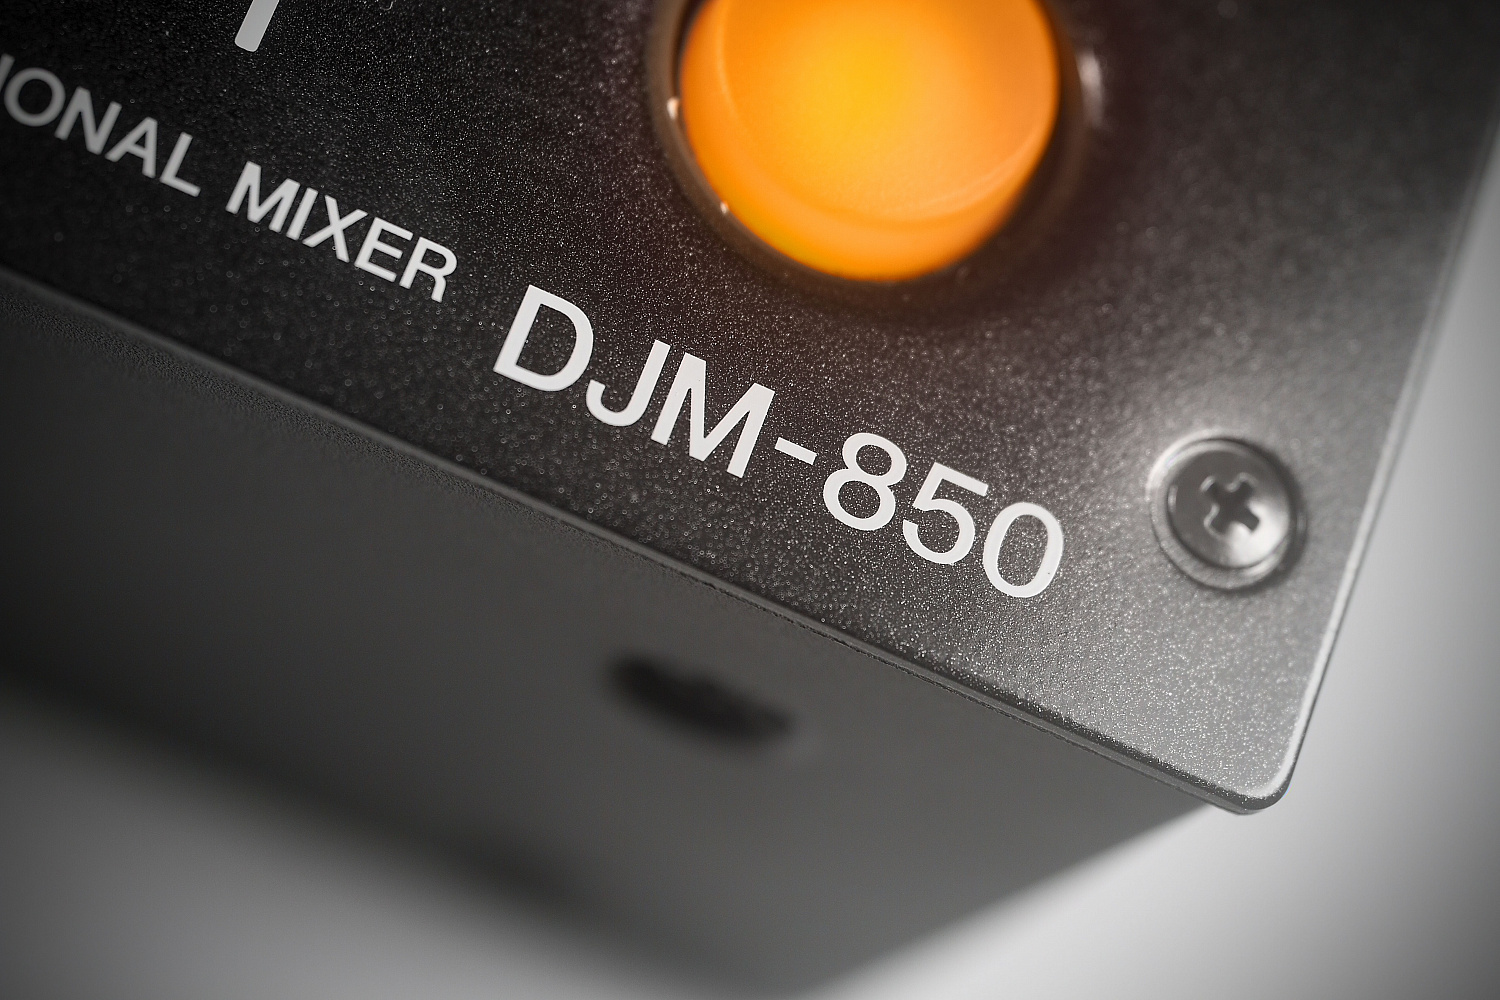 ОБЗОР: легендарный микшер Pioneer DJM-850.